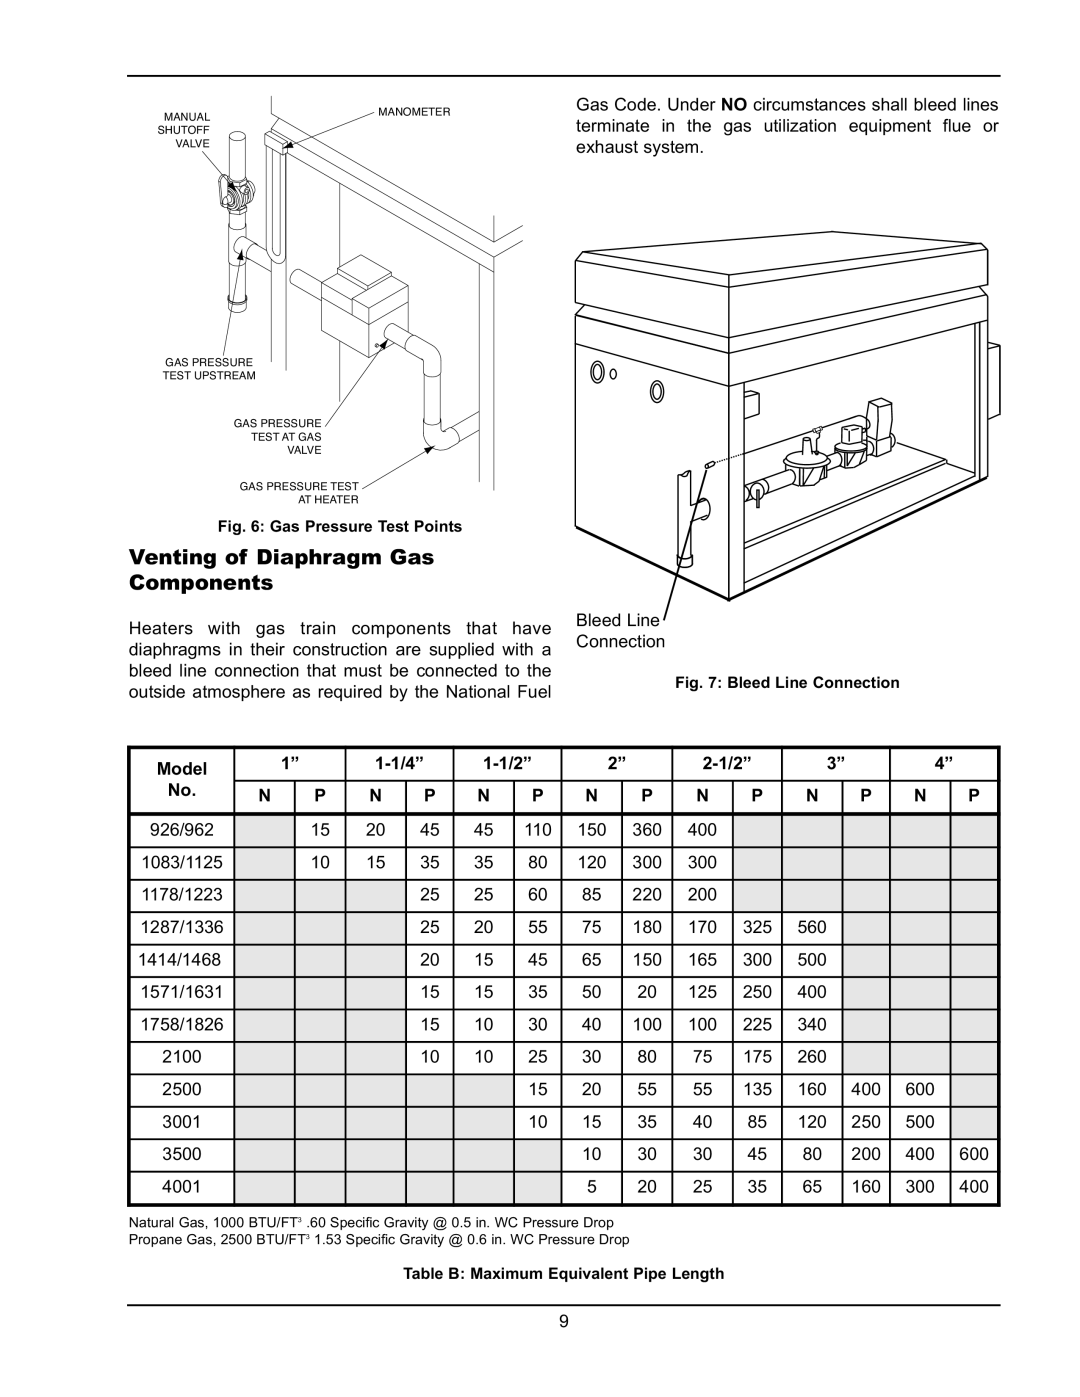 Raypak P-4001, P-1826, P-926, P-2100 manual Venting of Diaphragm Gas Components, Model, 1-1/4”, 1-1/2”, 2-1/2” 